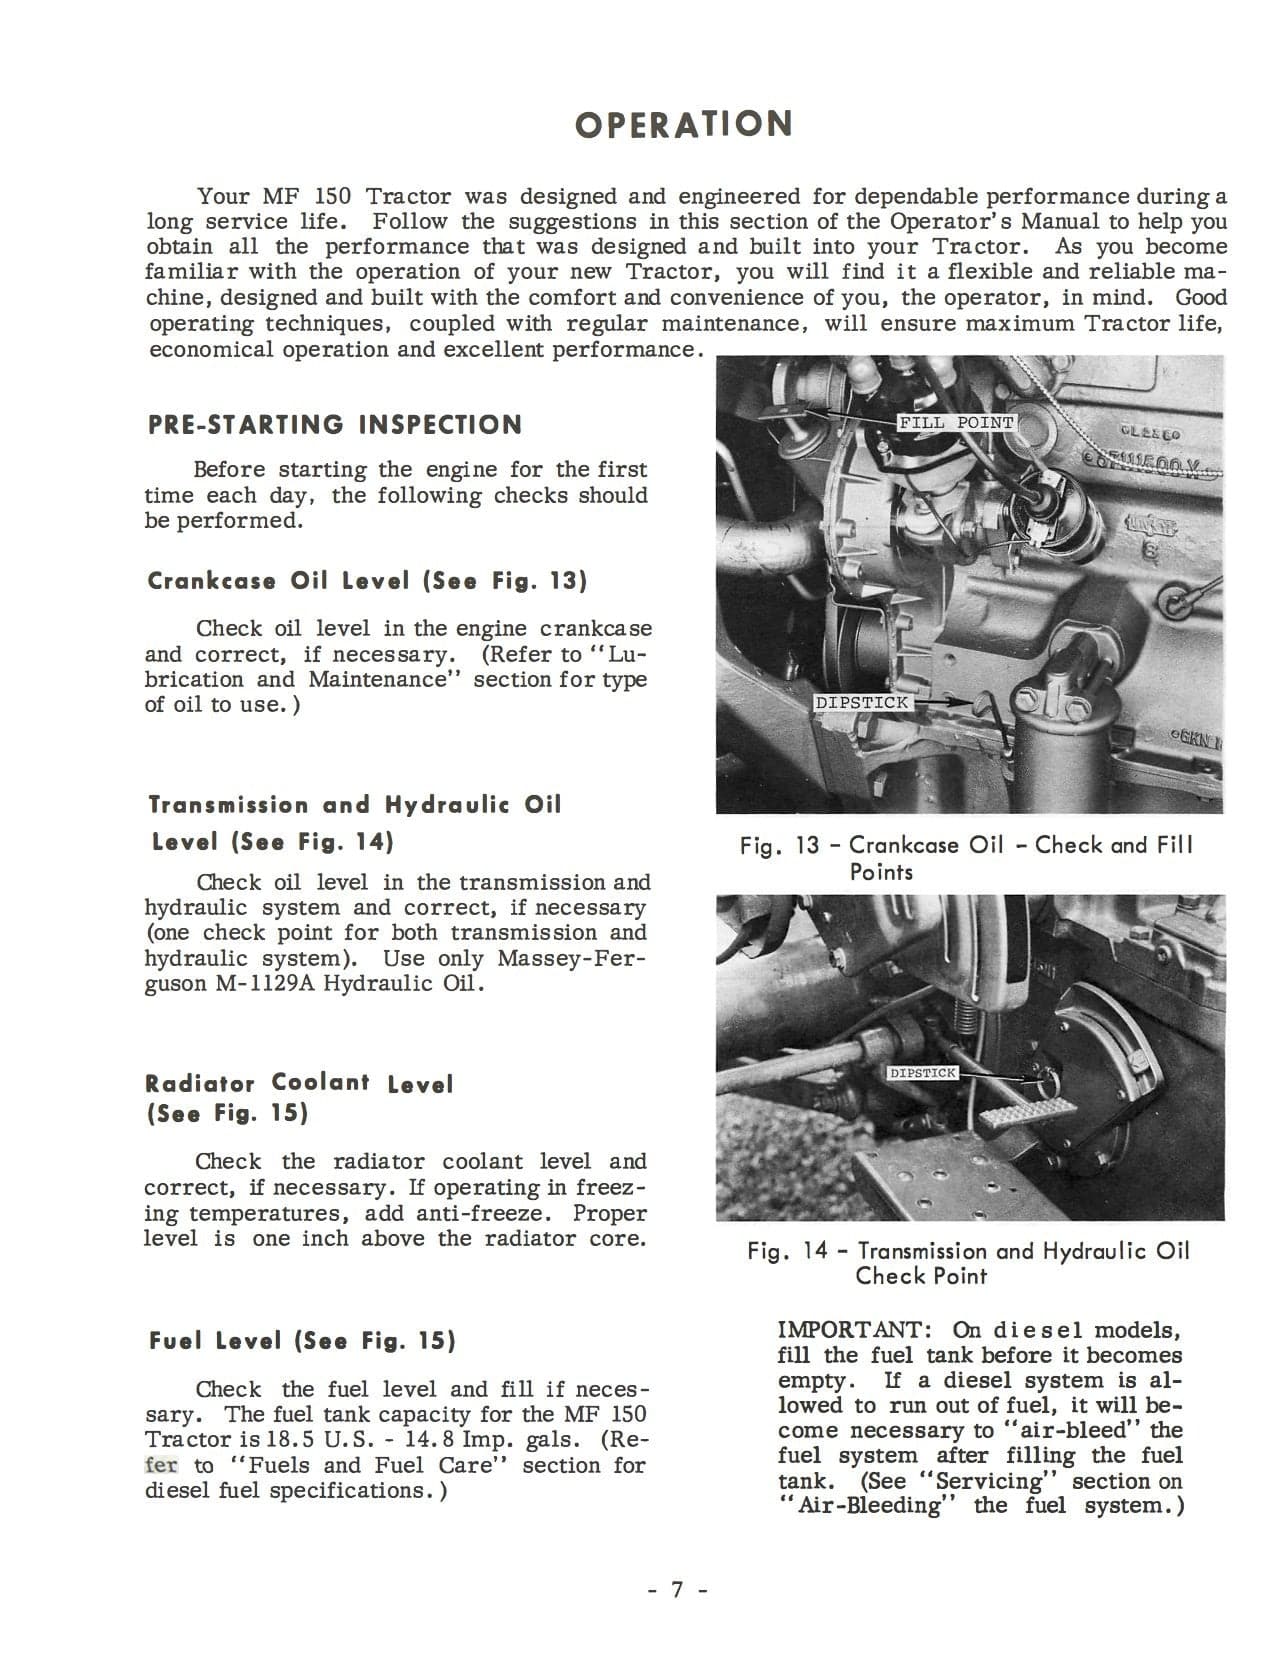 Massey Ferguson MF 150 Tractor - Operator's Manual - Ag Manuals - A Provider of Digital Farm Manuals - 2